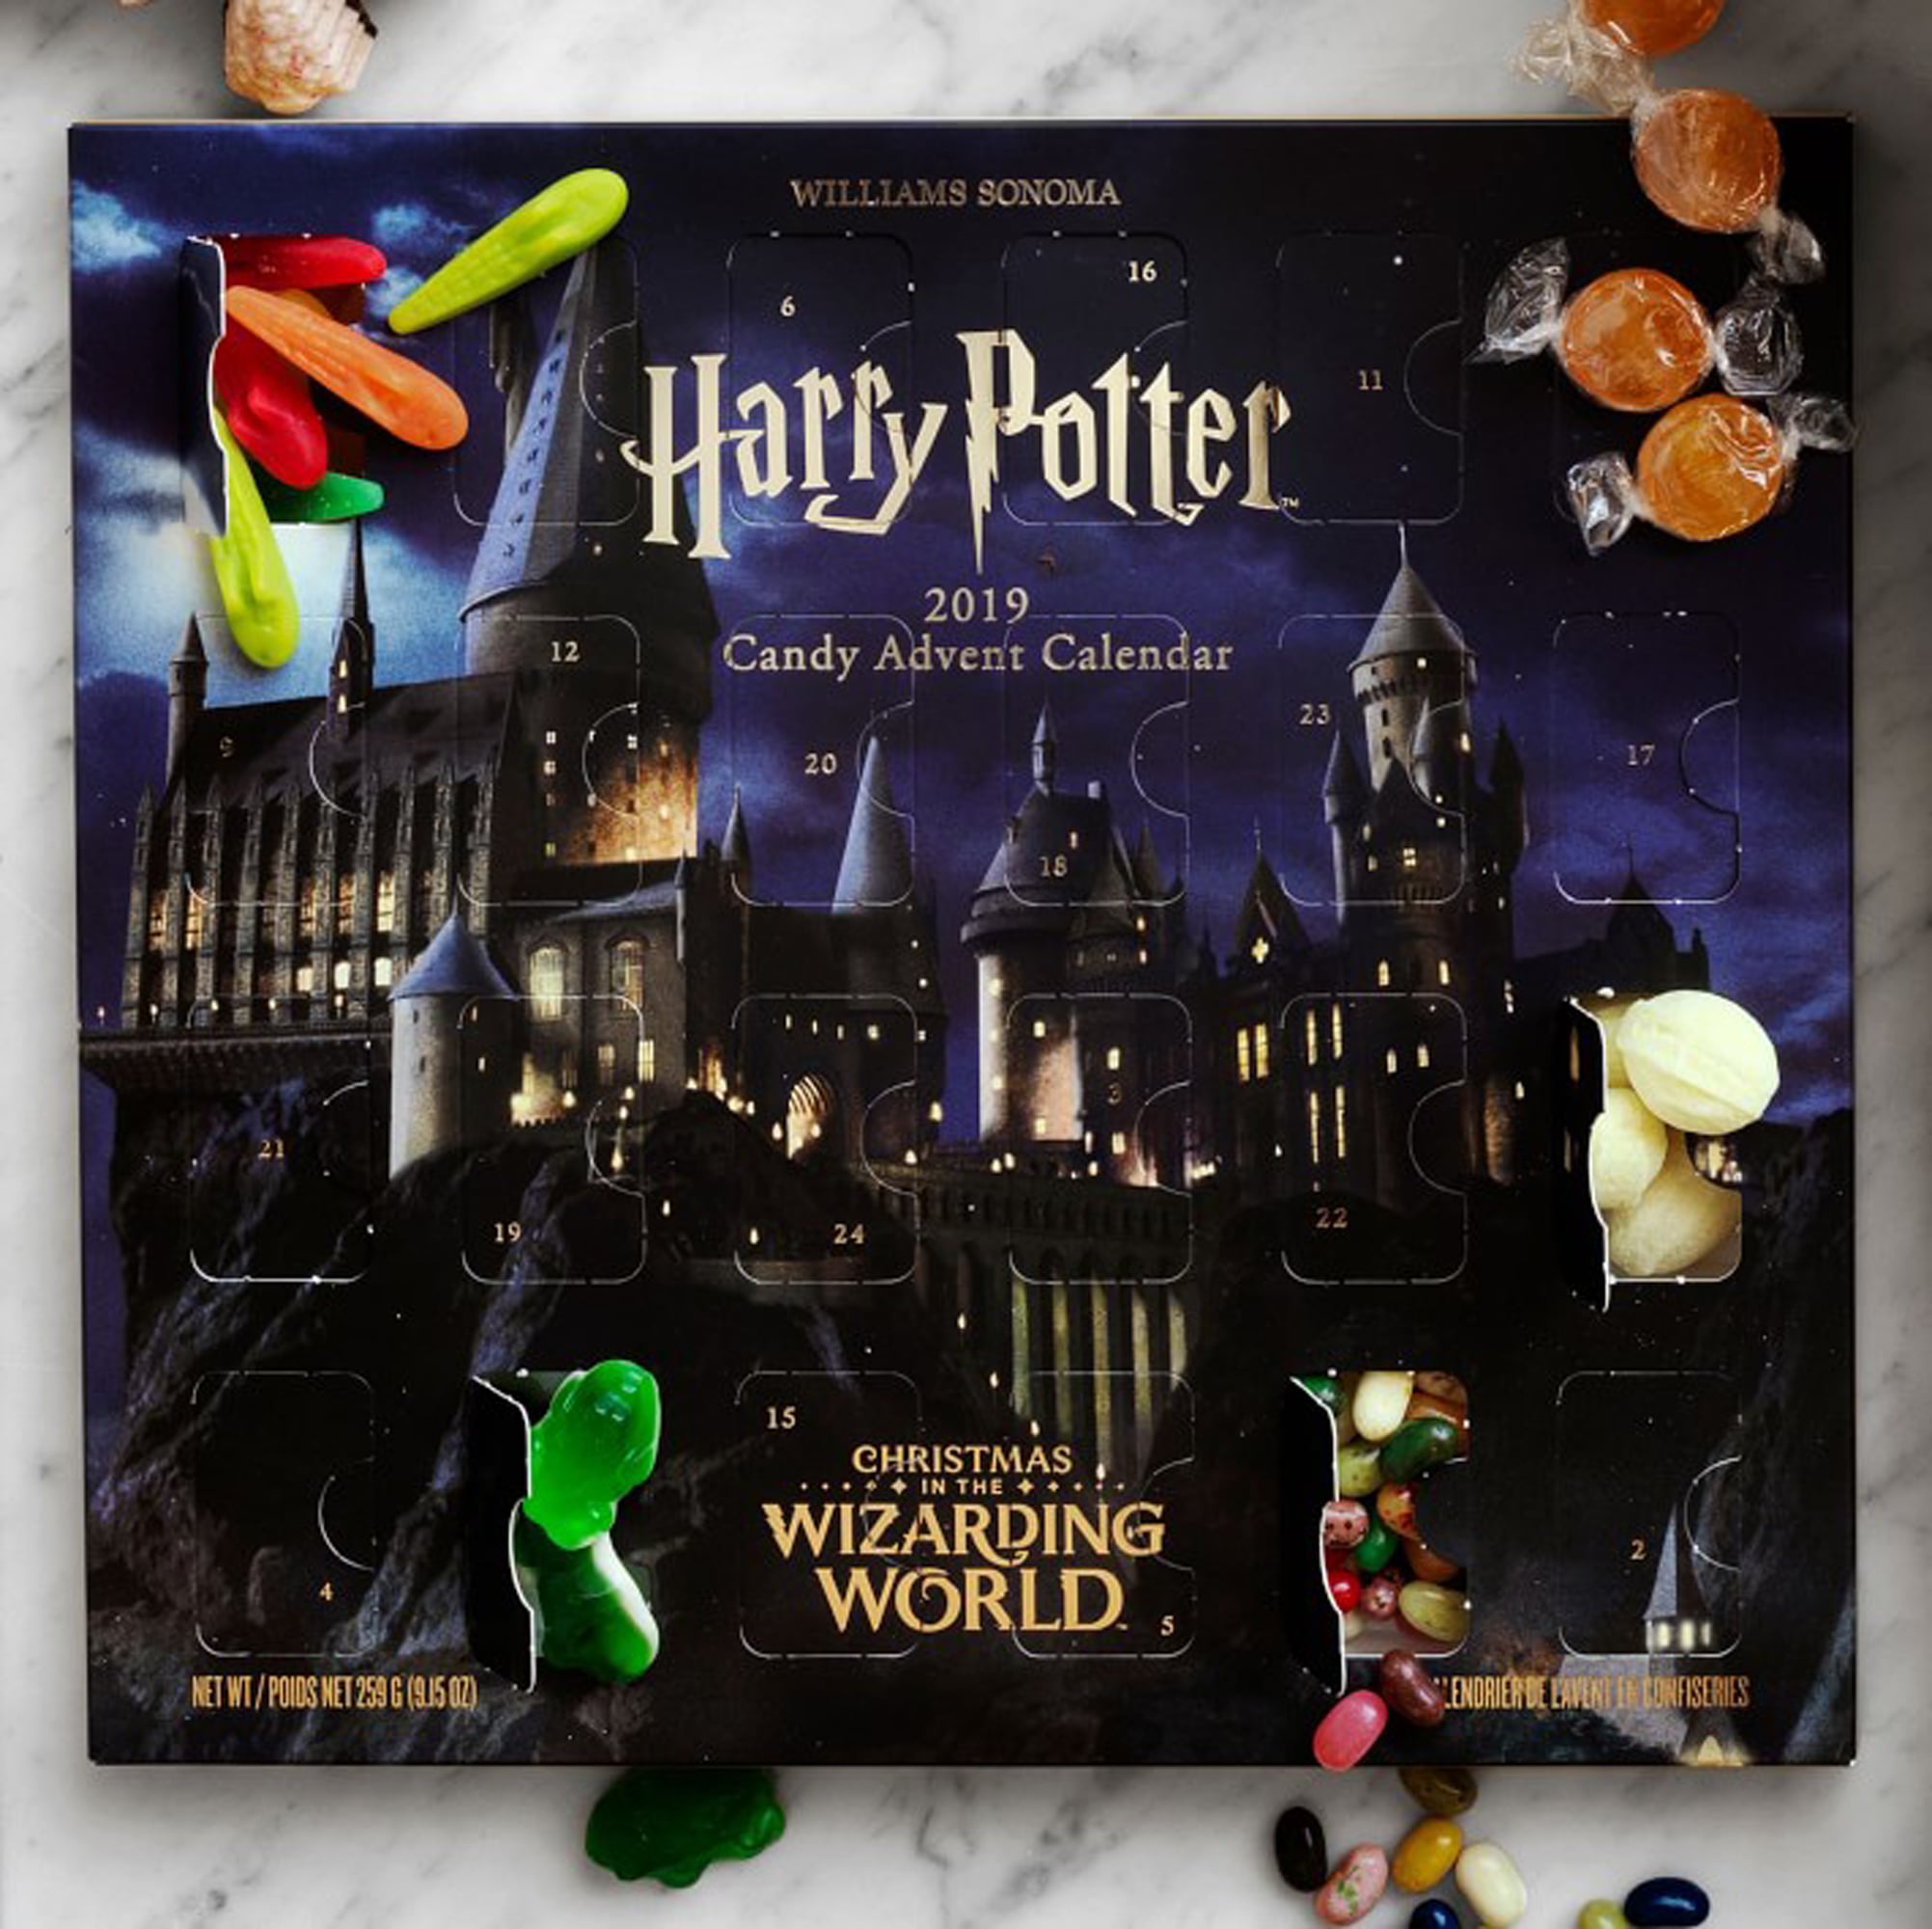 Harry Potter Candy Advent Calendar at Williams Sonoma POPSUGAR Food